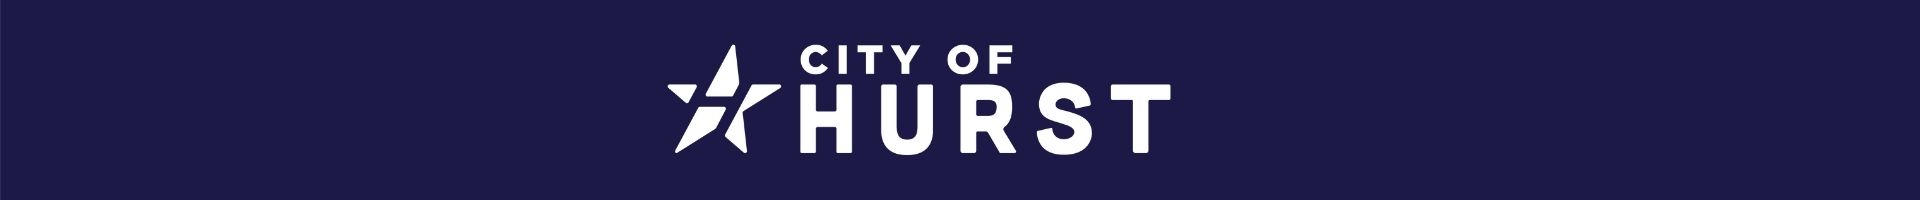 City of Hurst - Email notification system - City Logo